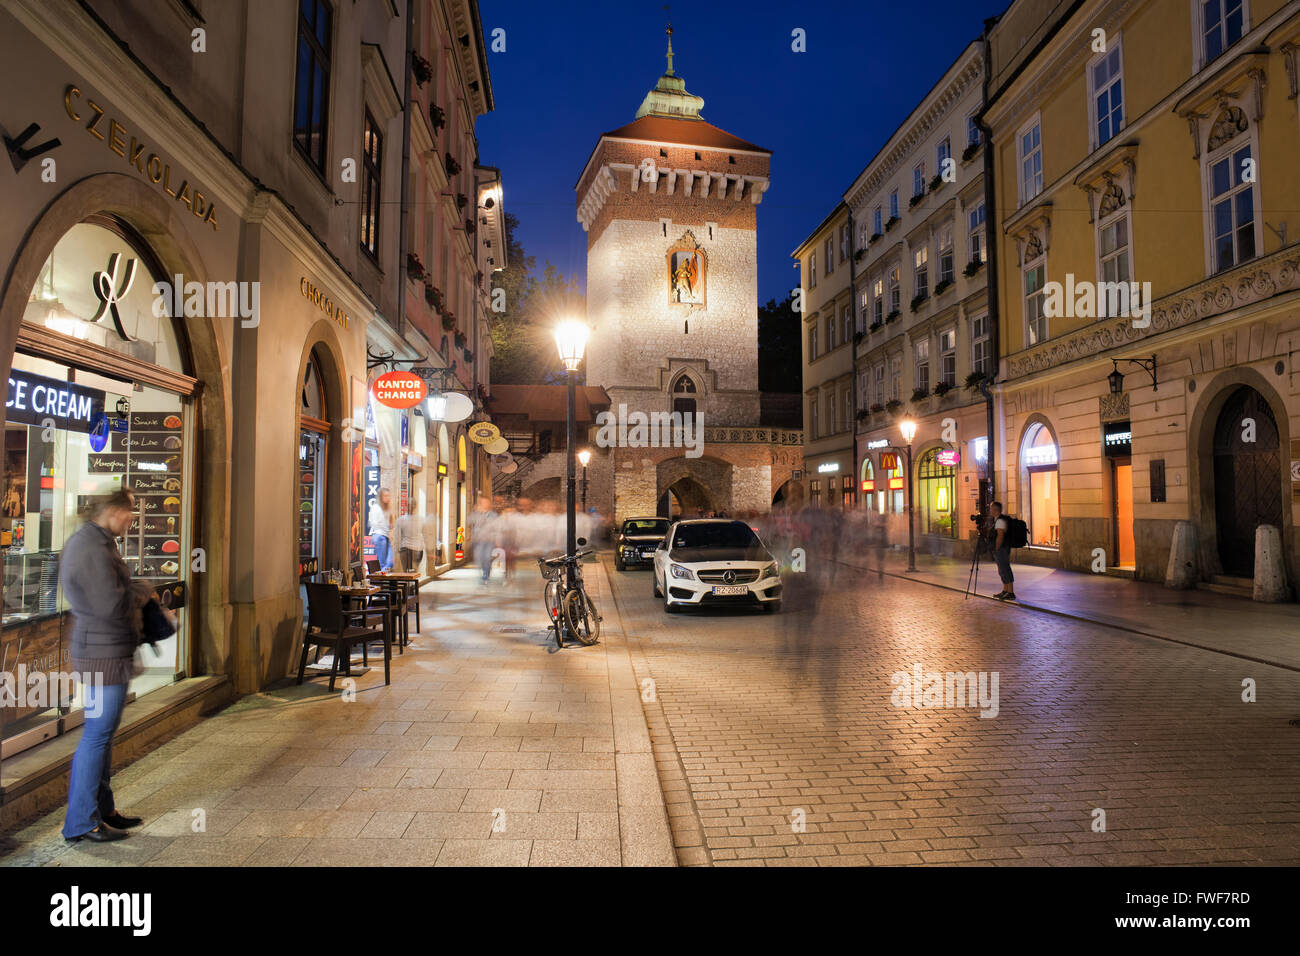 Poland, city of Krakow (Cracow), Old Town, St. Florian Gate (Brama Florianska) and Florianska Street at night Stock Photo